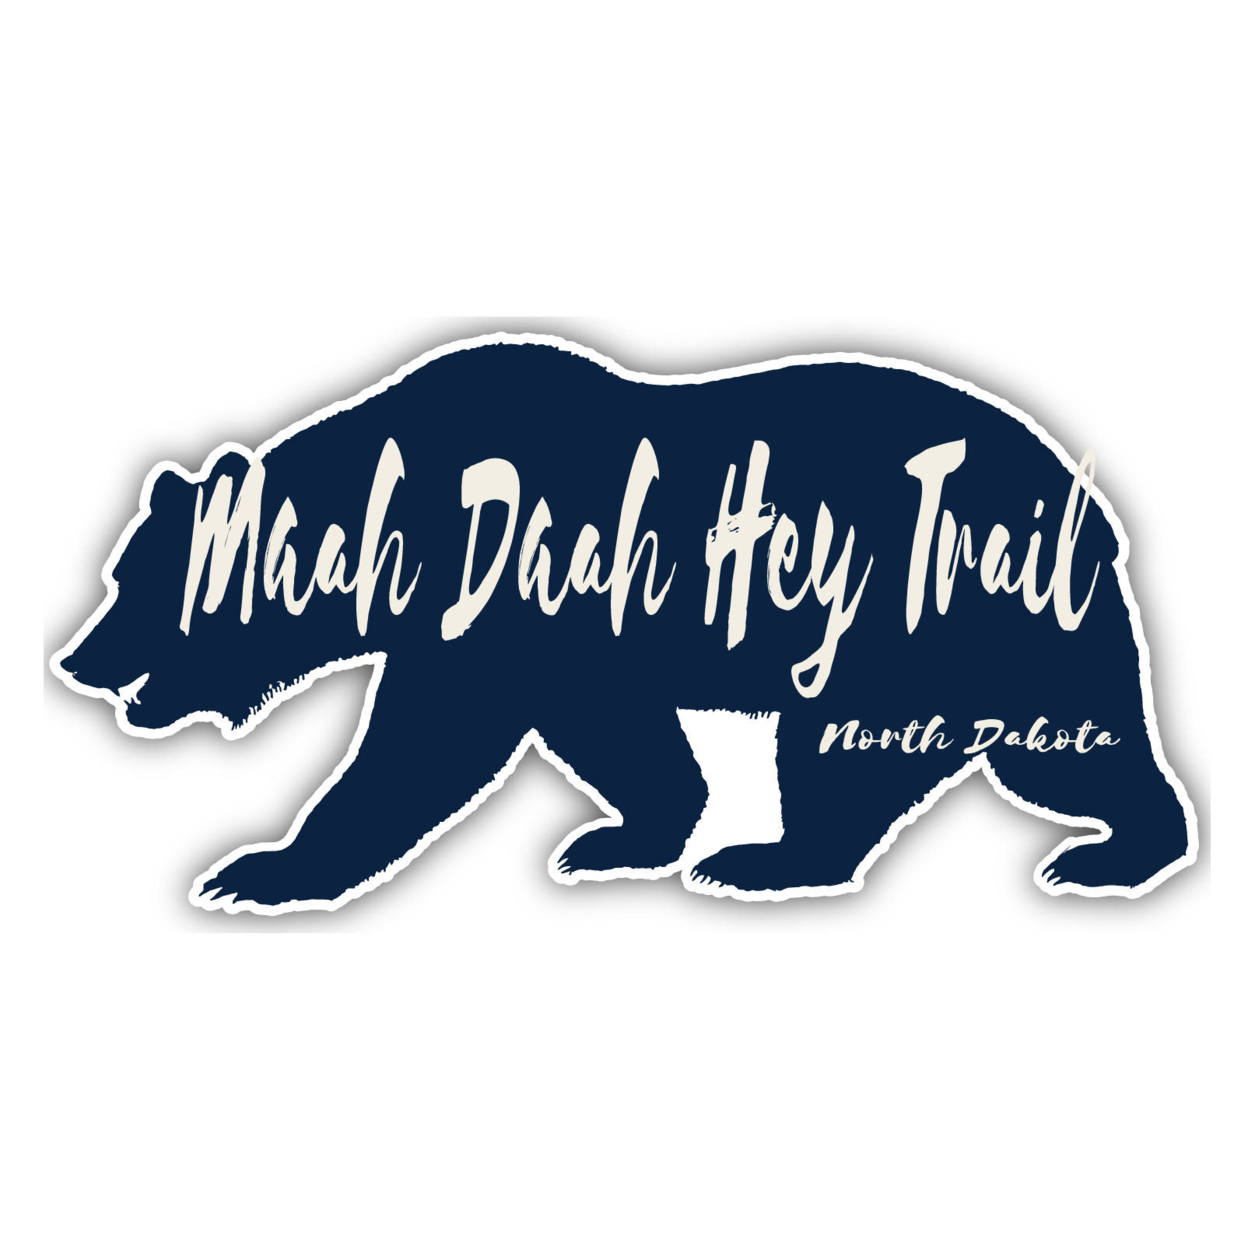 Maah Daah Hey Trail North Dakota Souvenir Decorative Stickers (Choose Theme And Size) - 4-Inch, Bear